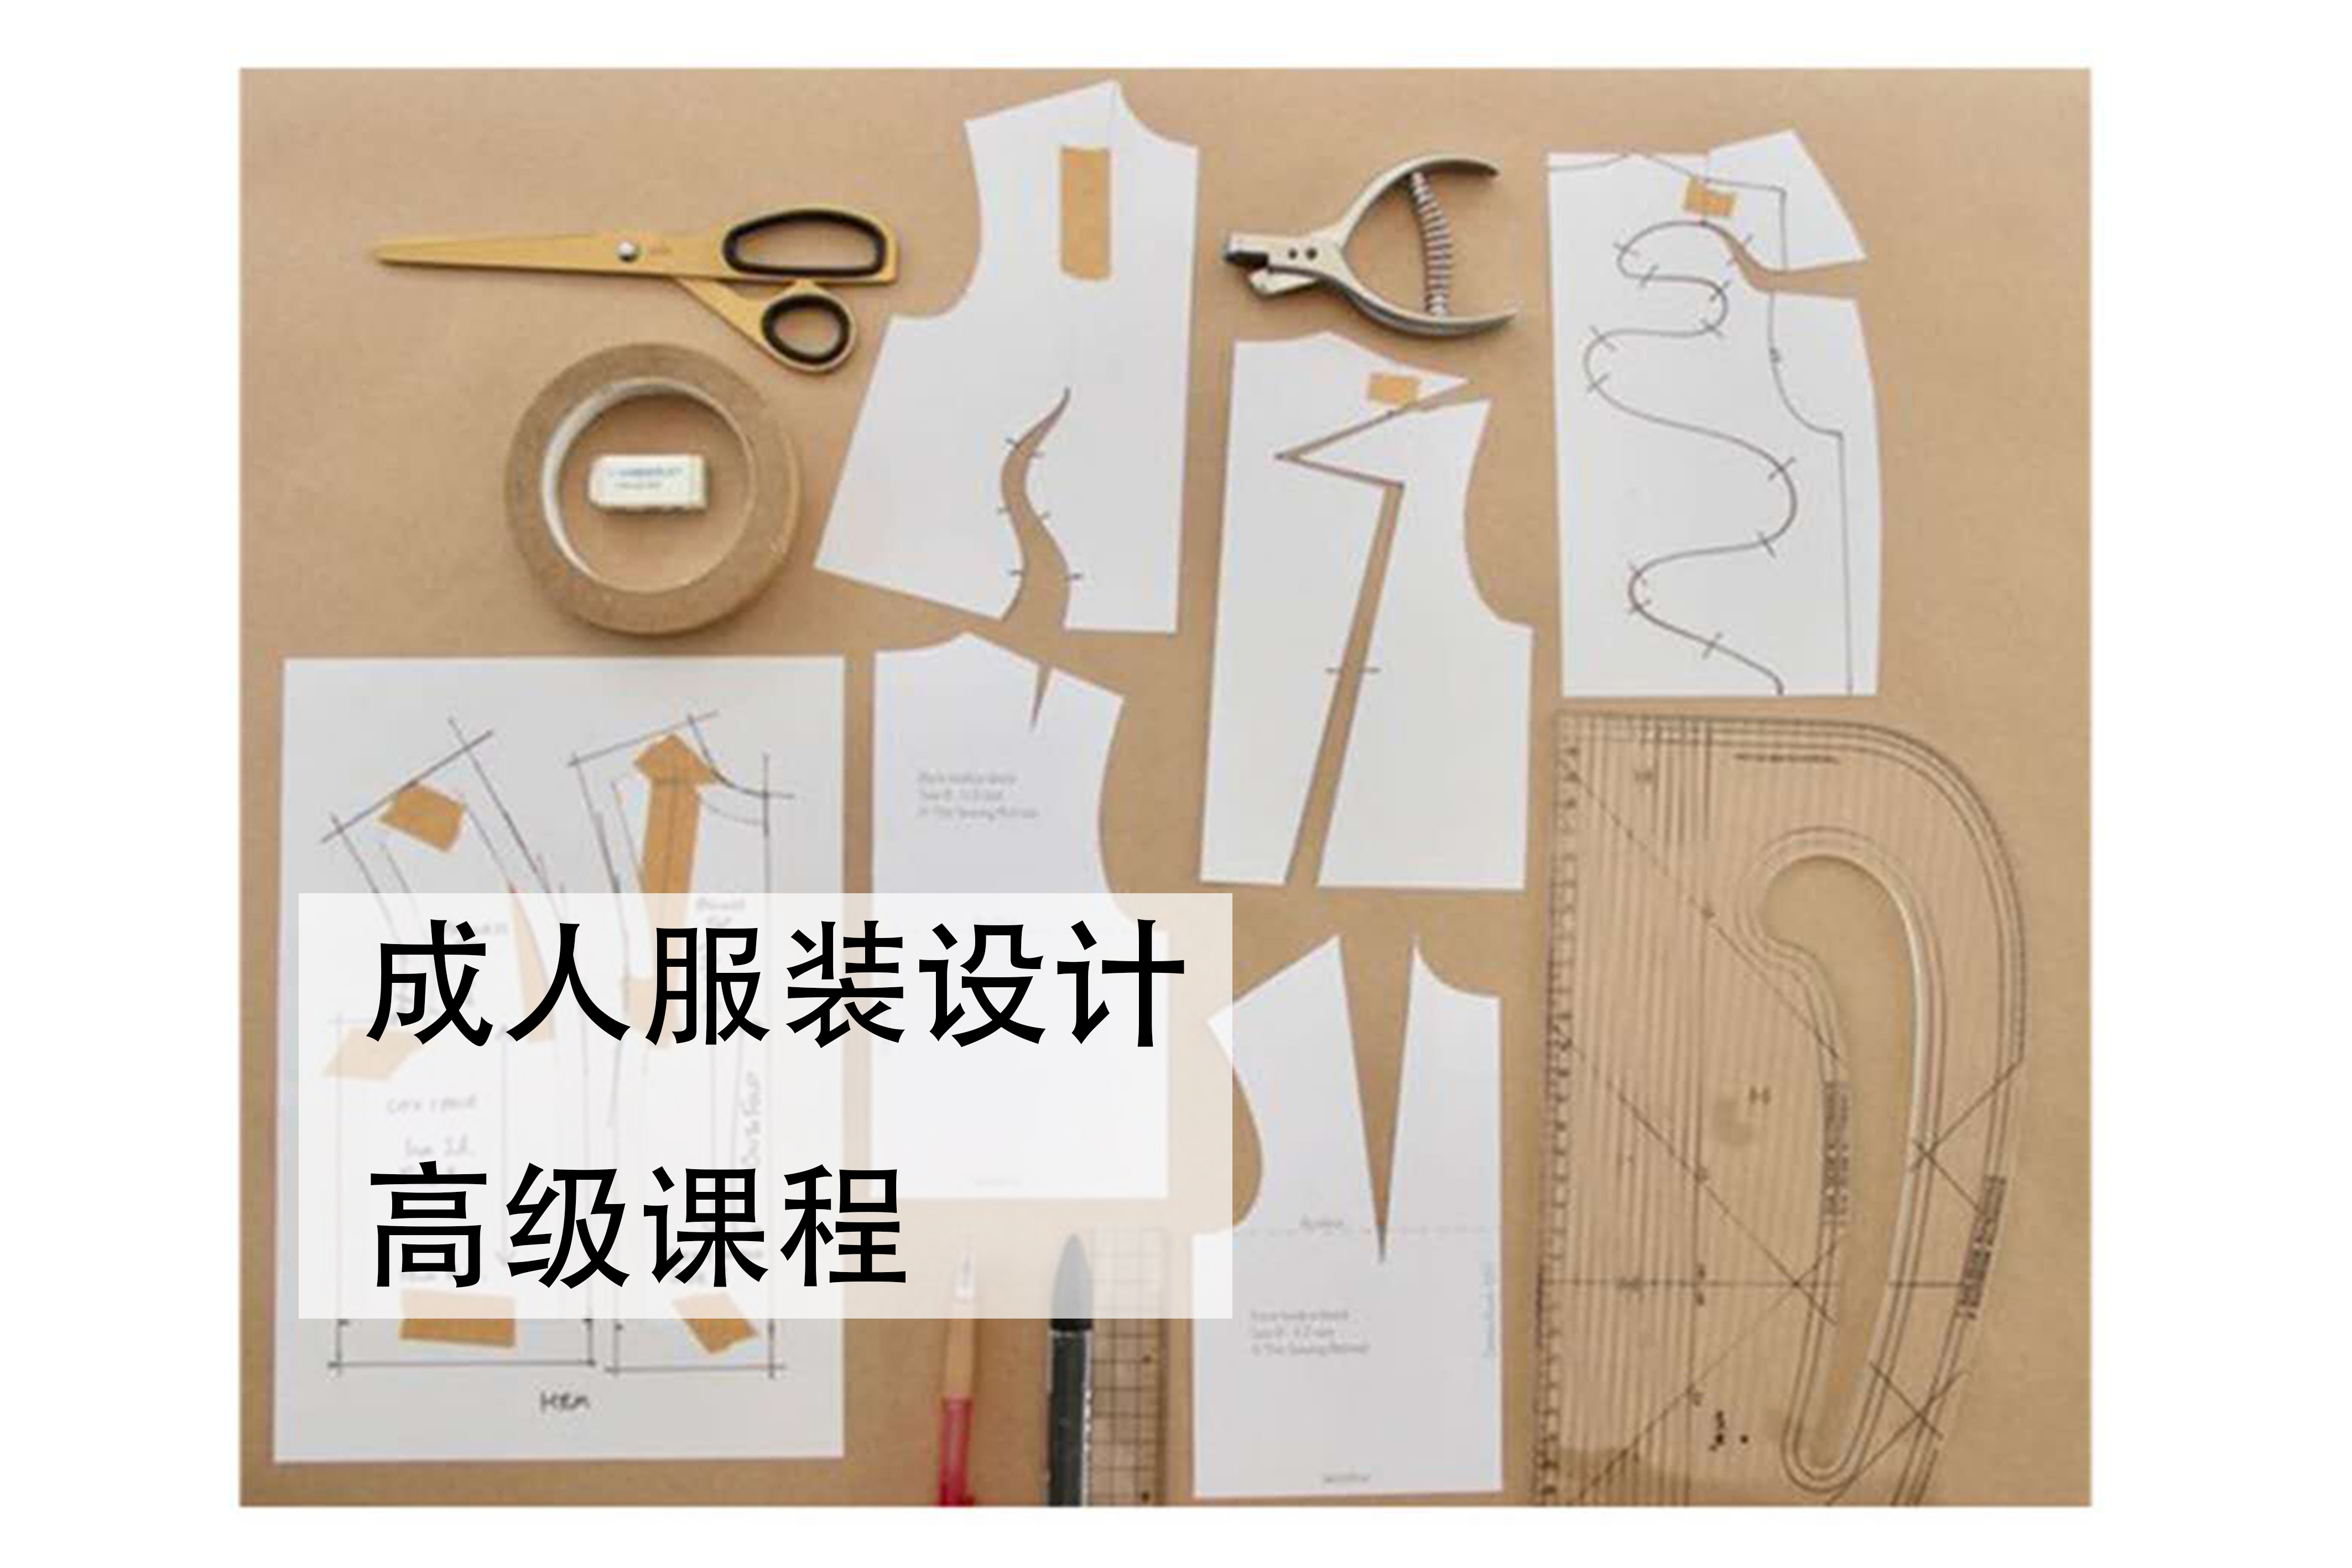 IAS服装设计学院深圳成人服装设计高级课程图片